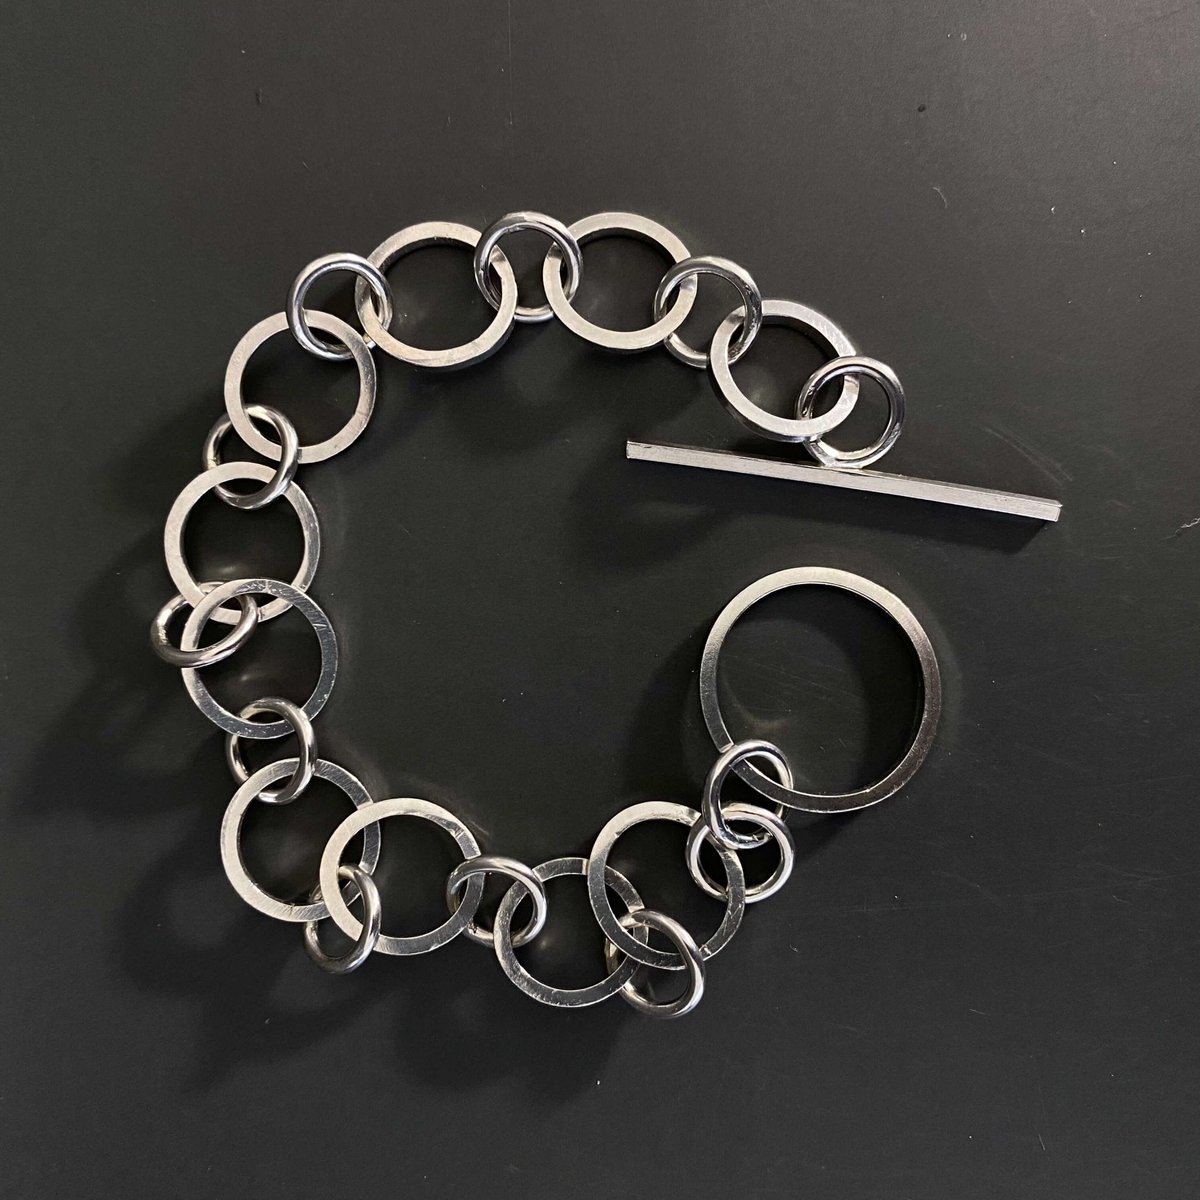 Contemporary Handmade Chunky Sterling Silver Circle Bracelet tuppu.net/6d623c0d #inbizhour #bizbubble ##UKGiftHour #giftideas #HandmadeHour #UKHashtags #shopsmall #MHHSBD #Silver